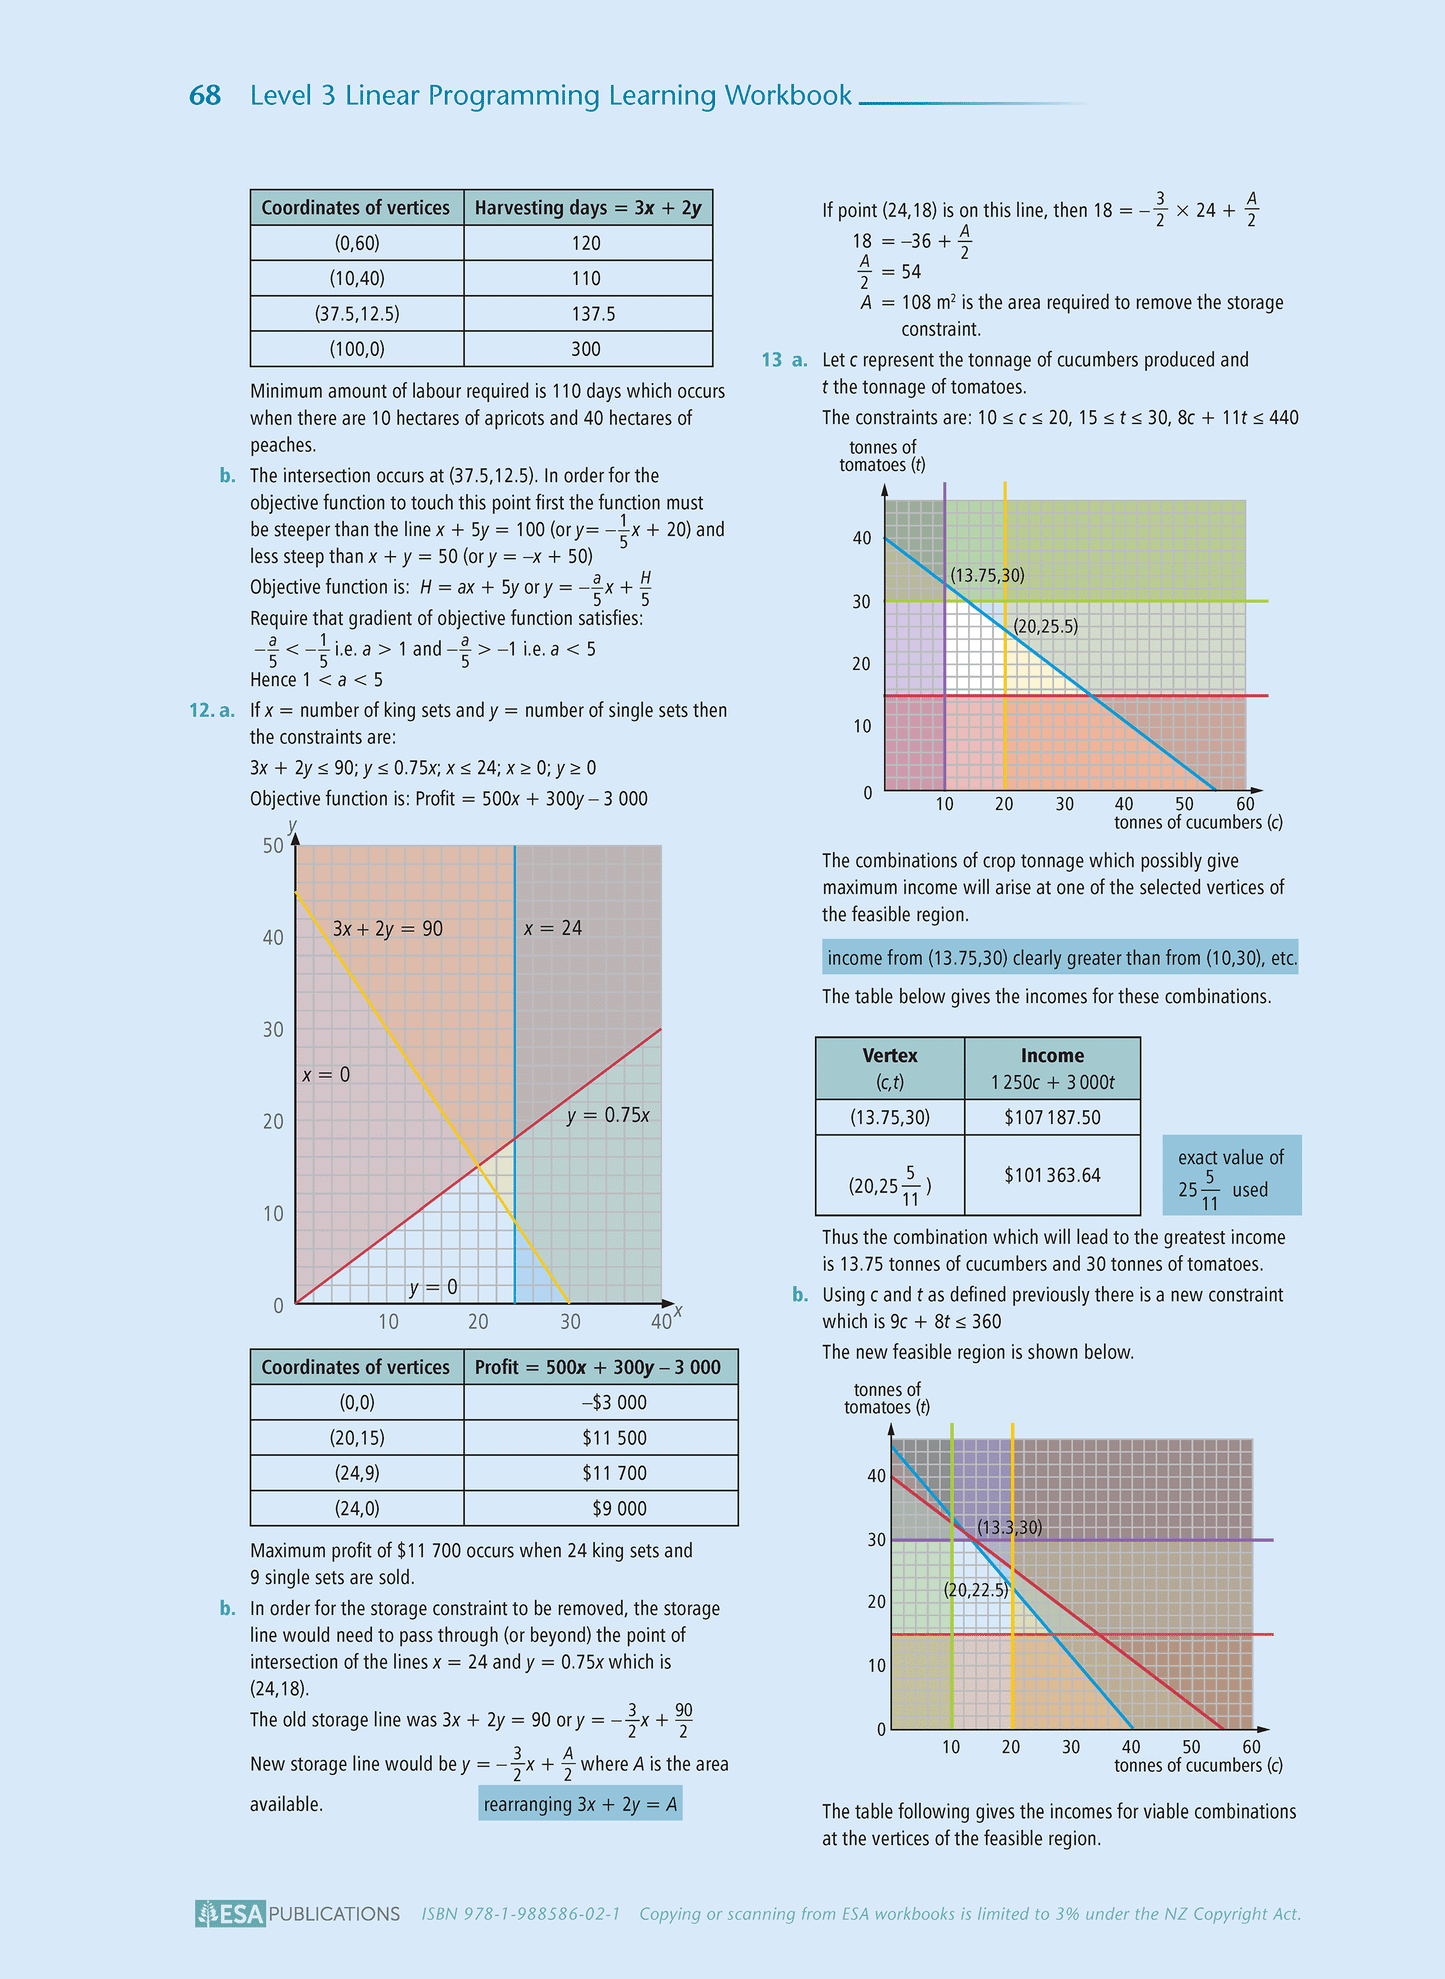 Level 3 Linear Programming 3.2 Learning Workbook